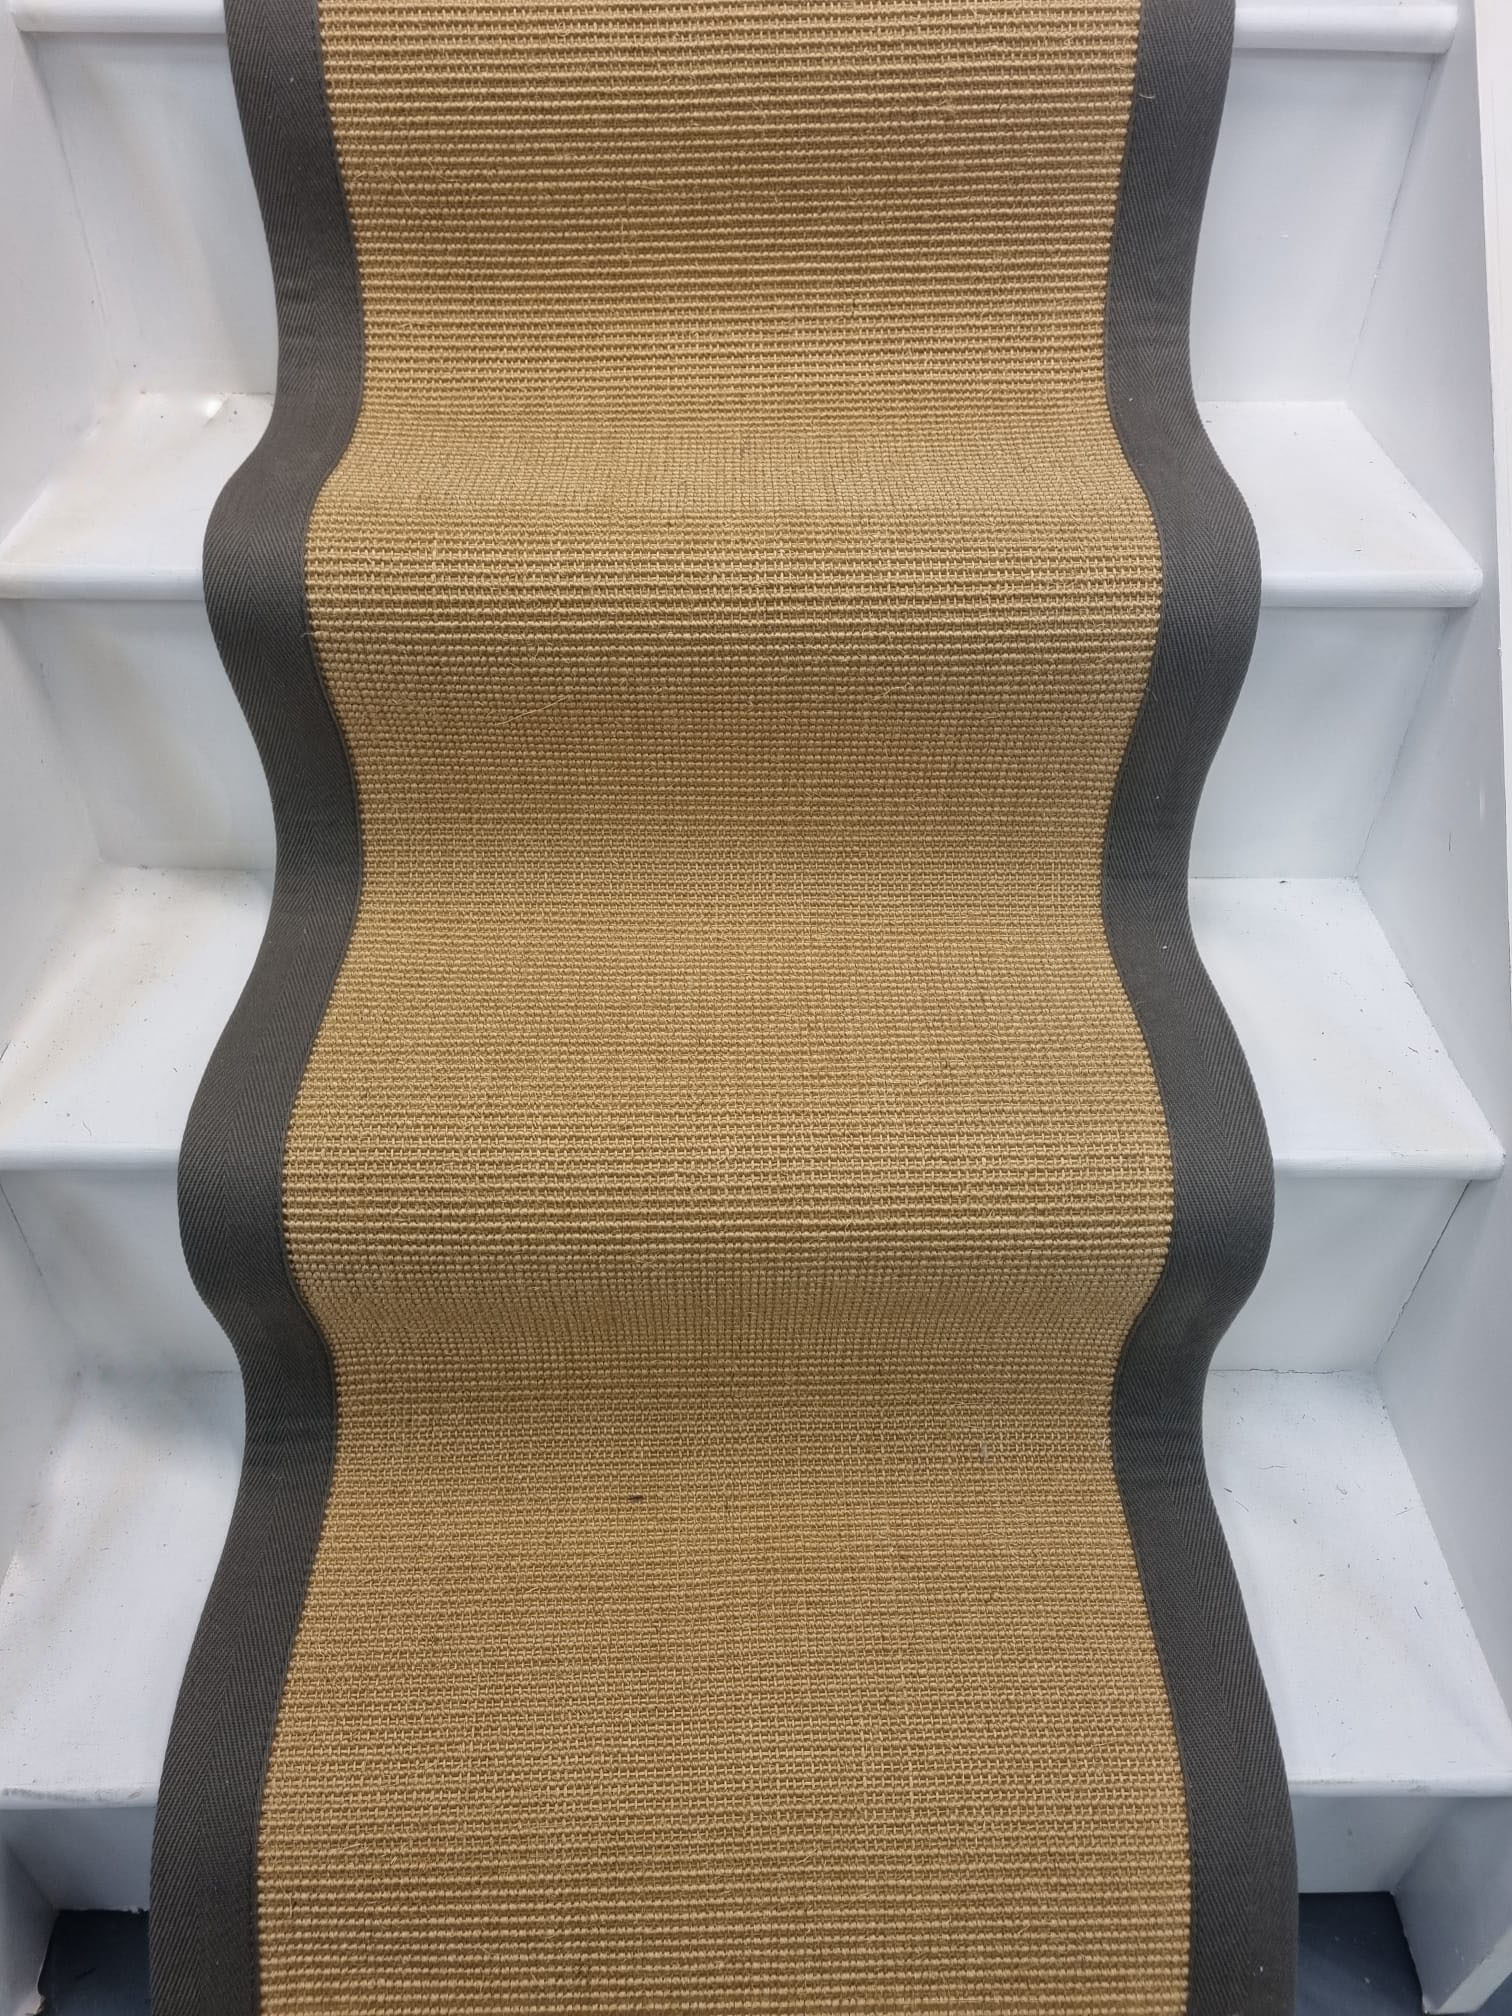 Sisal boucle bentley carpet stair runner from Alternative Flooring with sage green border